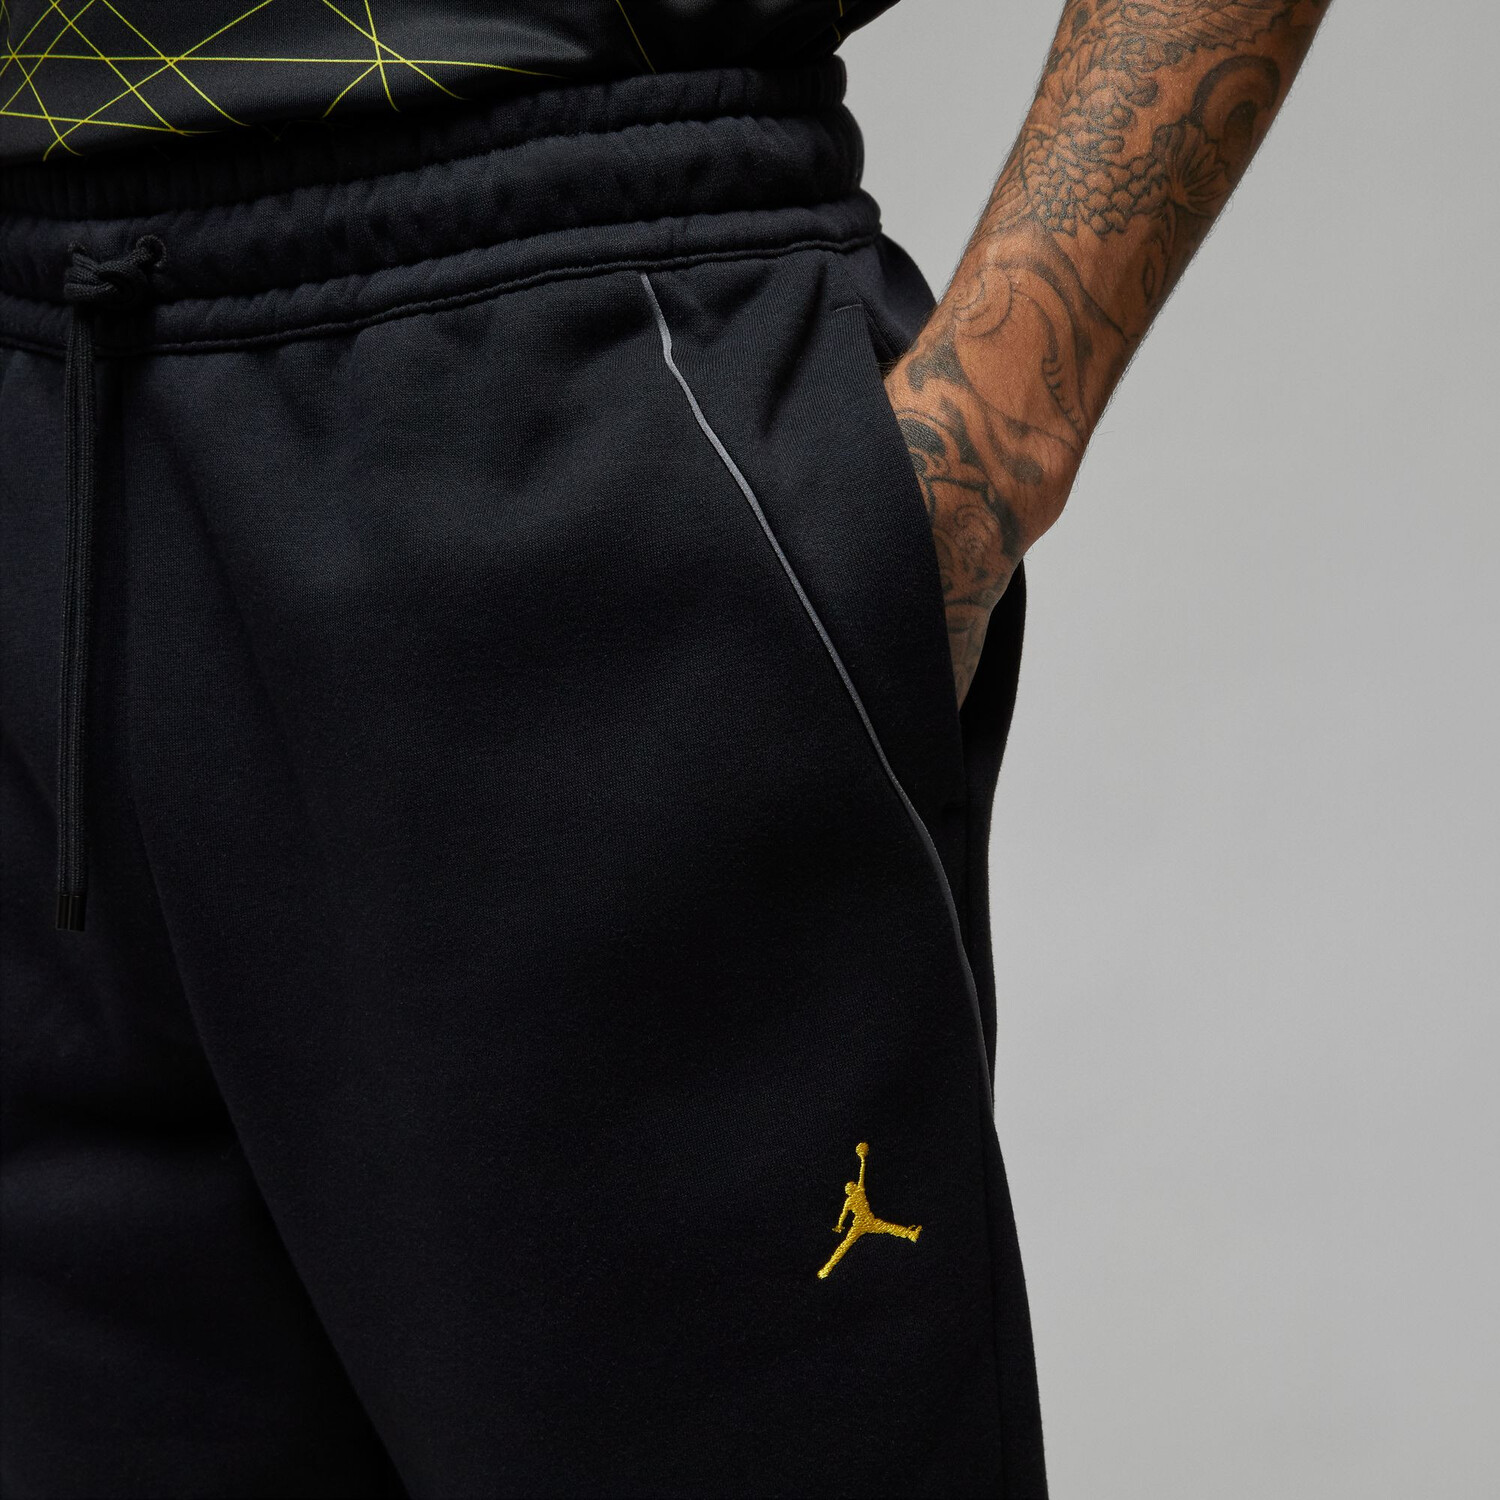 Pantalon jogging PSG x Jordan Fleece 2023/2024 - Noir/Gris/Orange –  Footkorner